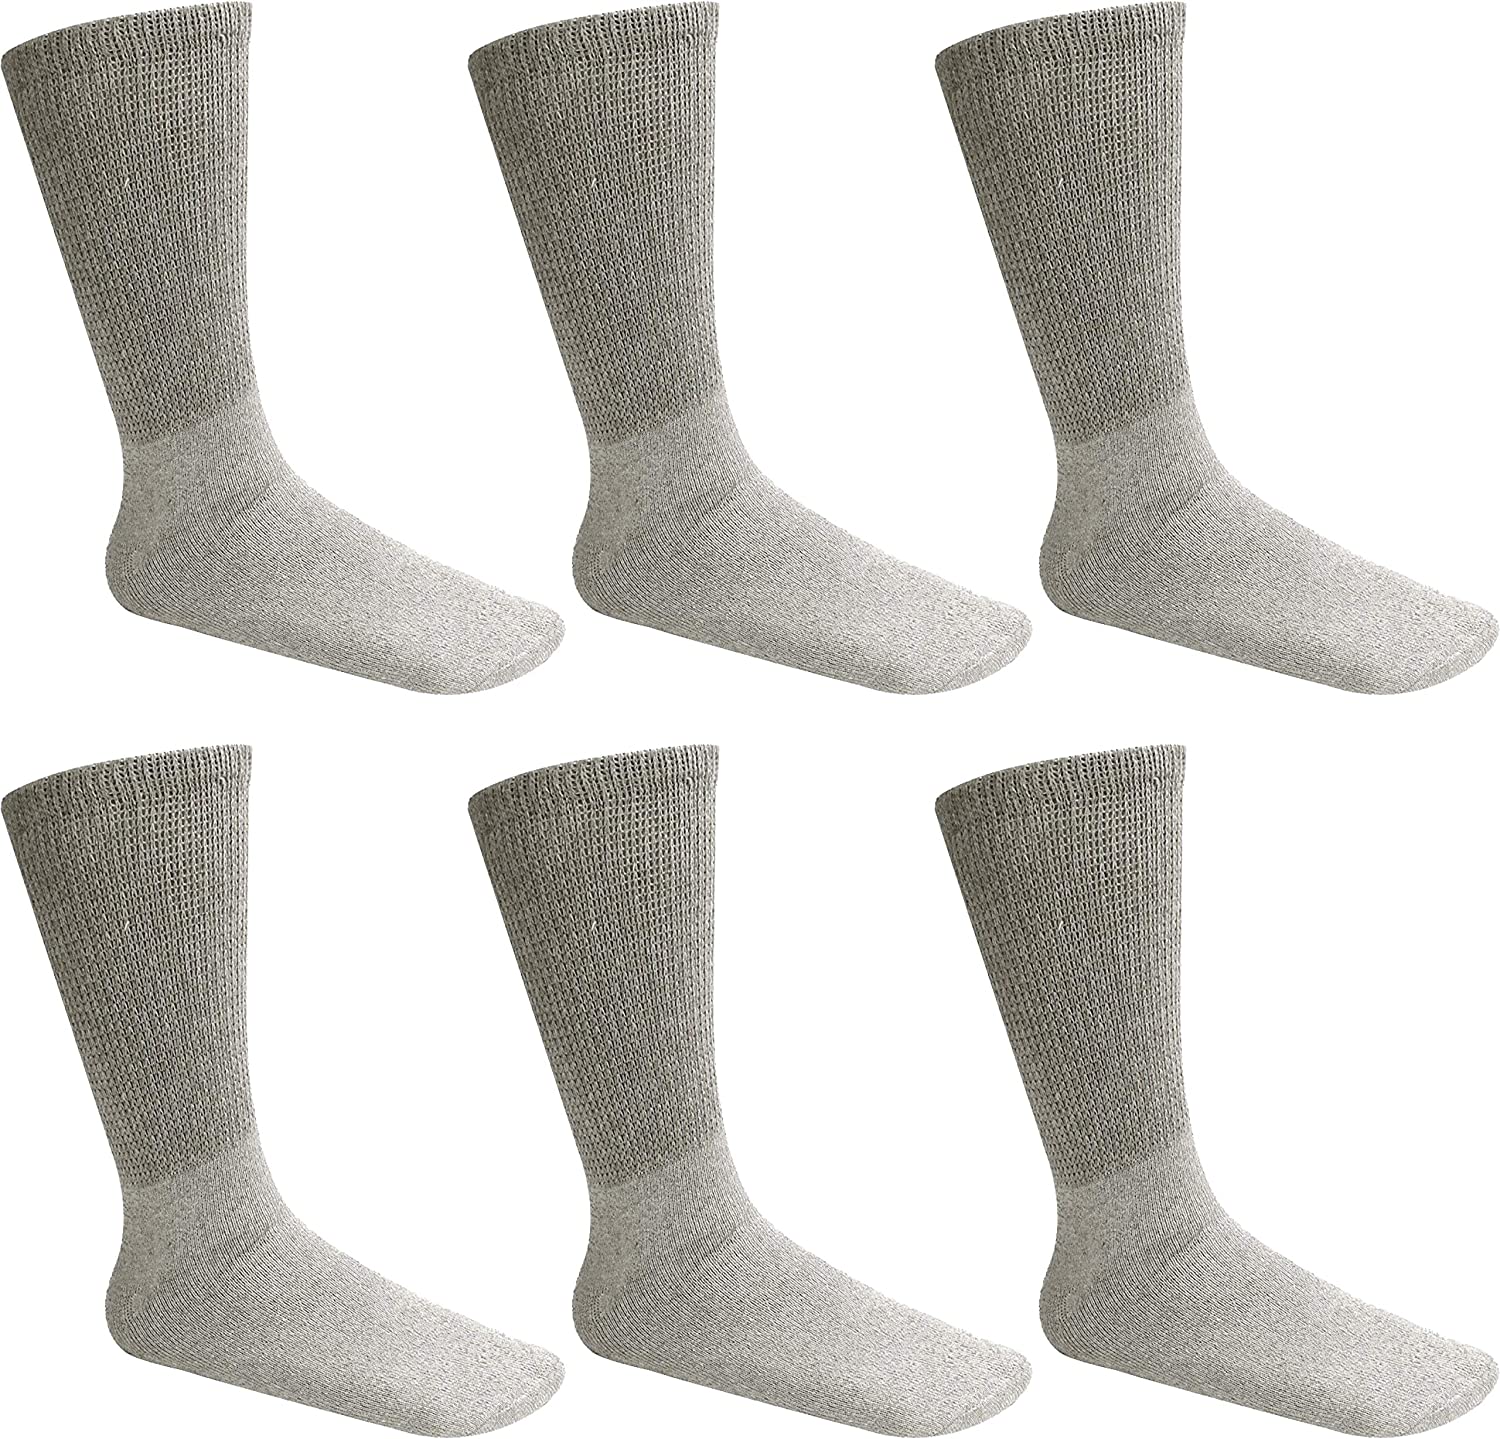 Diabetic Crew Socks Comfort Doctor Approved Non-Binding Circulatory Cotton Cushion Diabetic Socks For Men’s Women’s